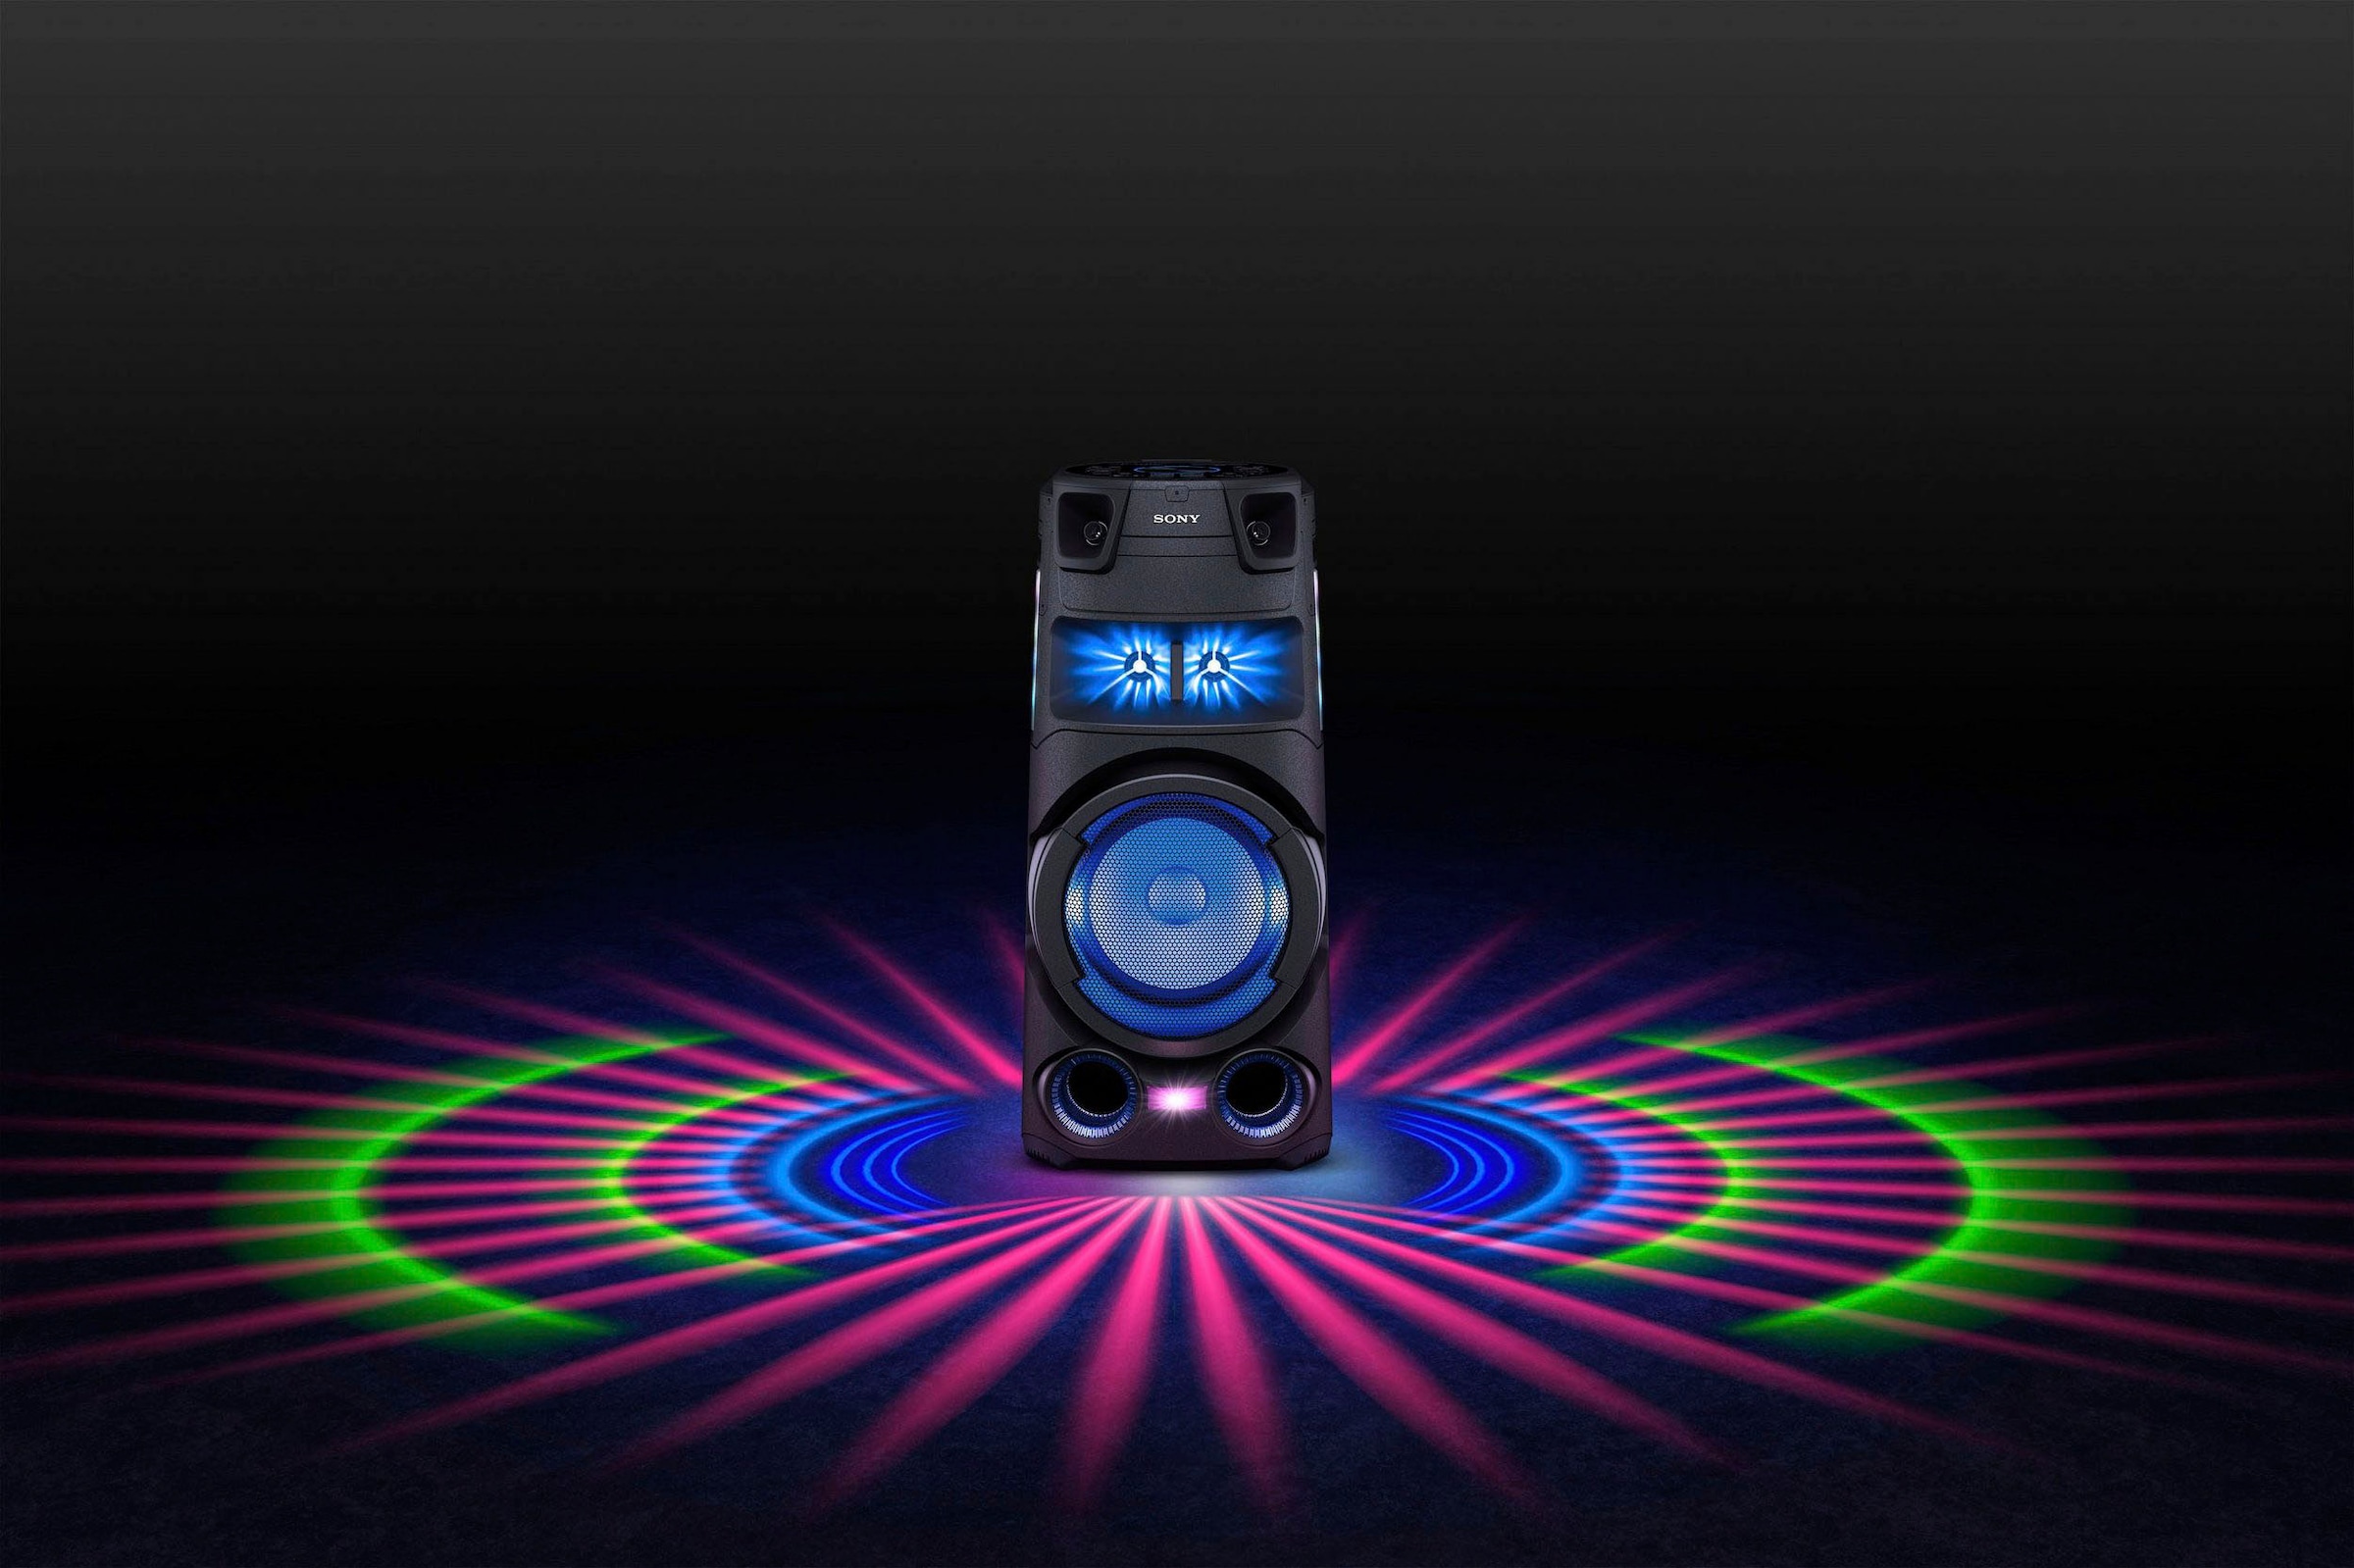 Sony Party-Lautsprecher »MHC-V73D«